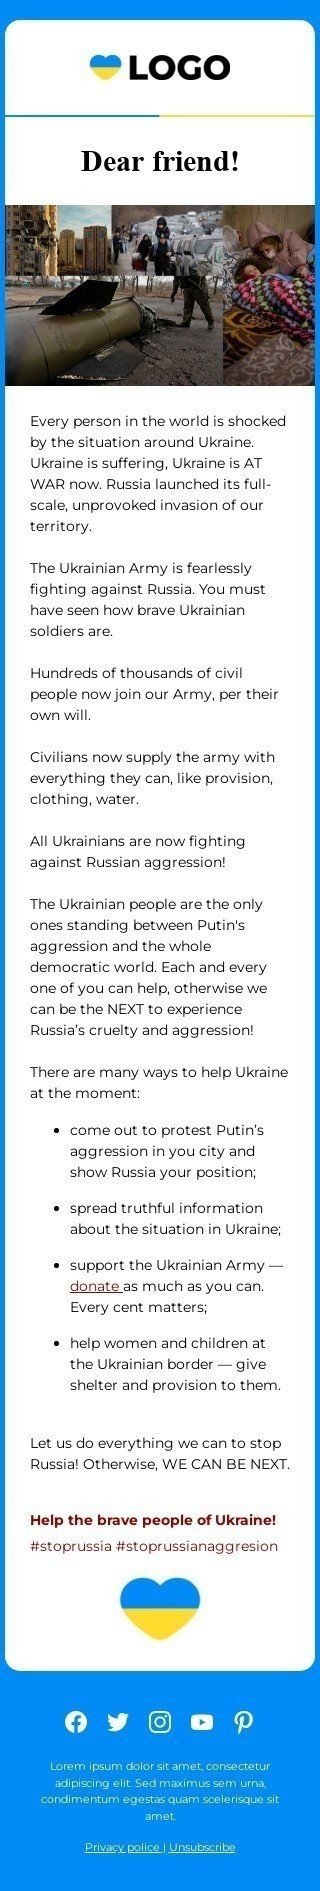 The "Spread a word Russian Aggression in Ukraine" email template Ansicht auf Mobilgeräten